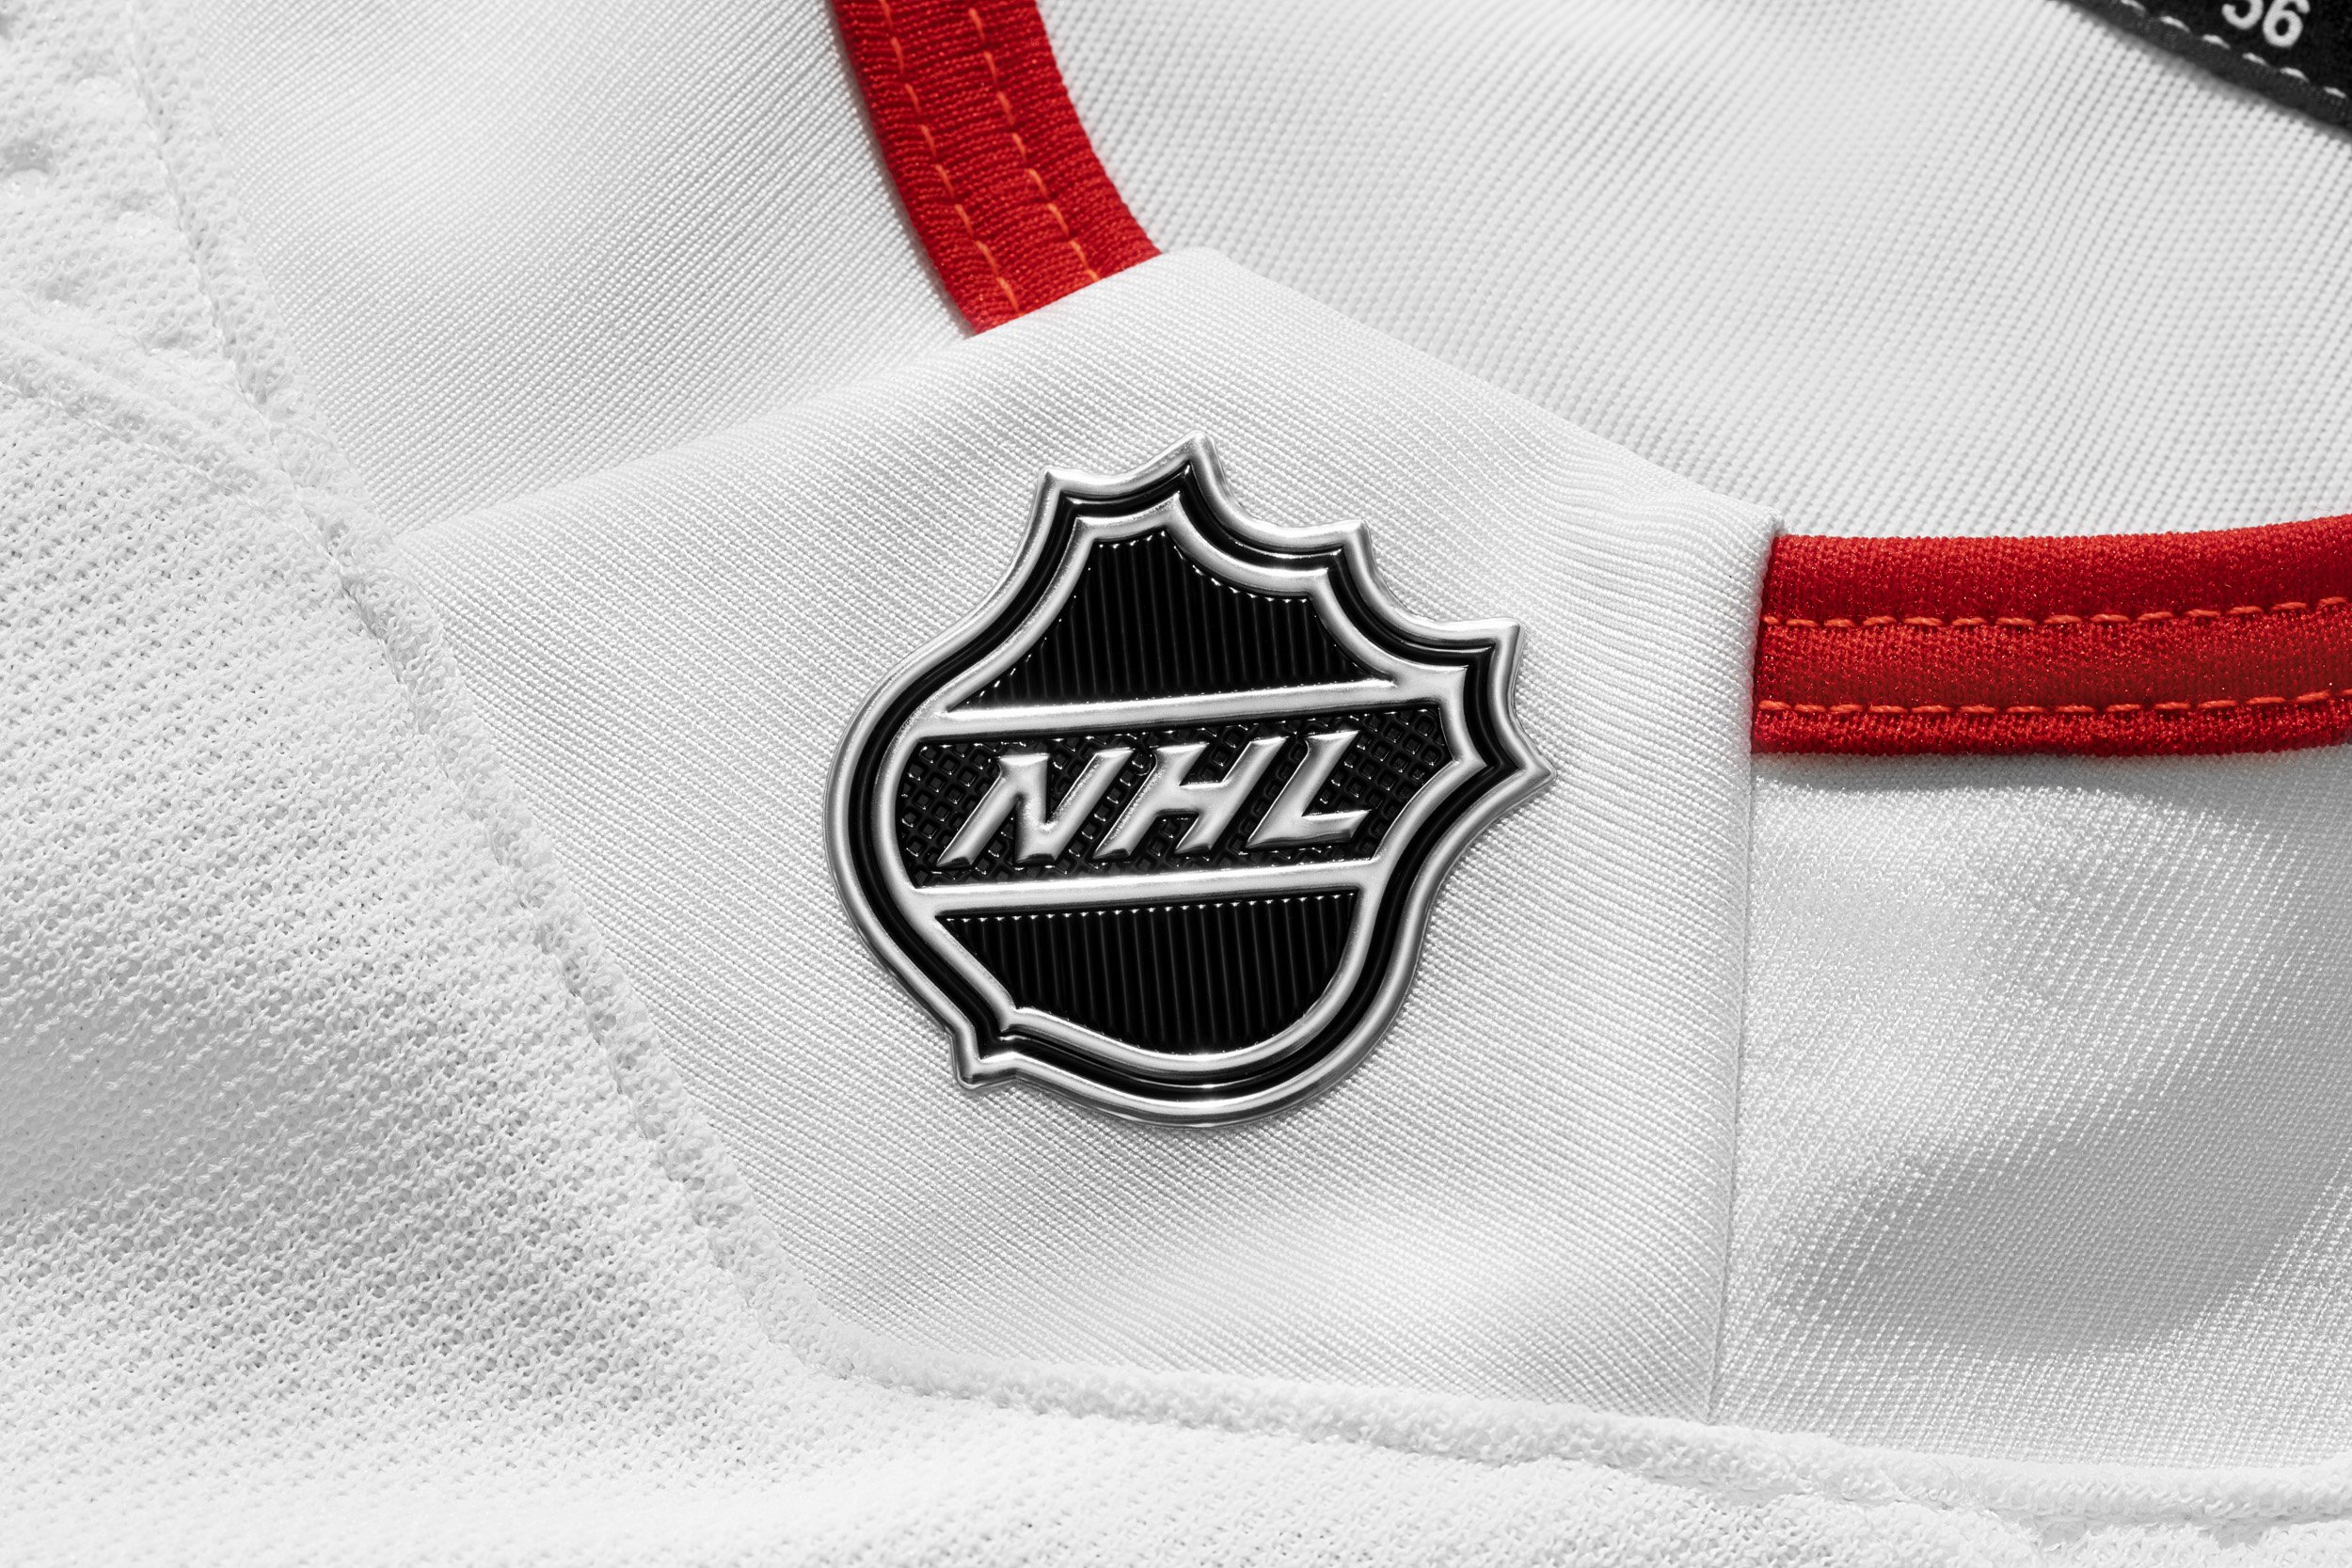 2019 NHL All-Star Jersey — UNISWAG